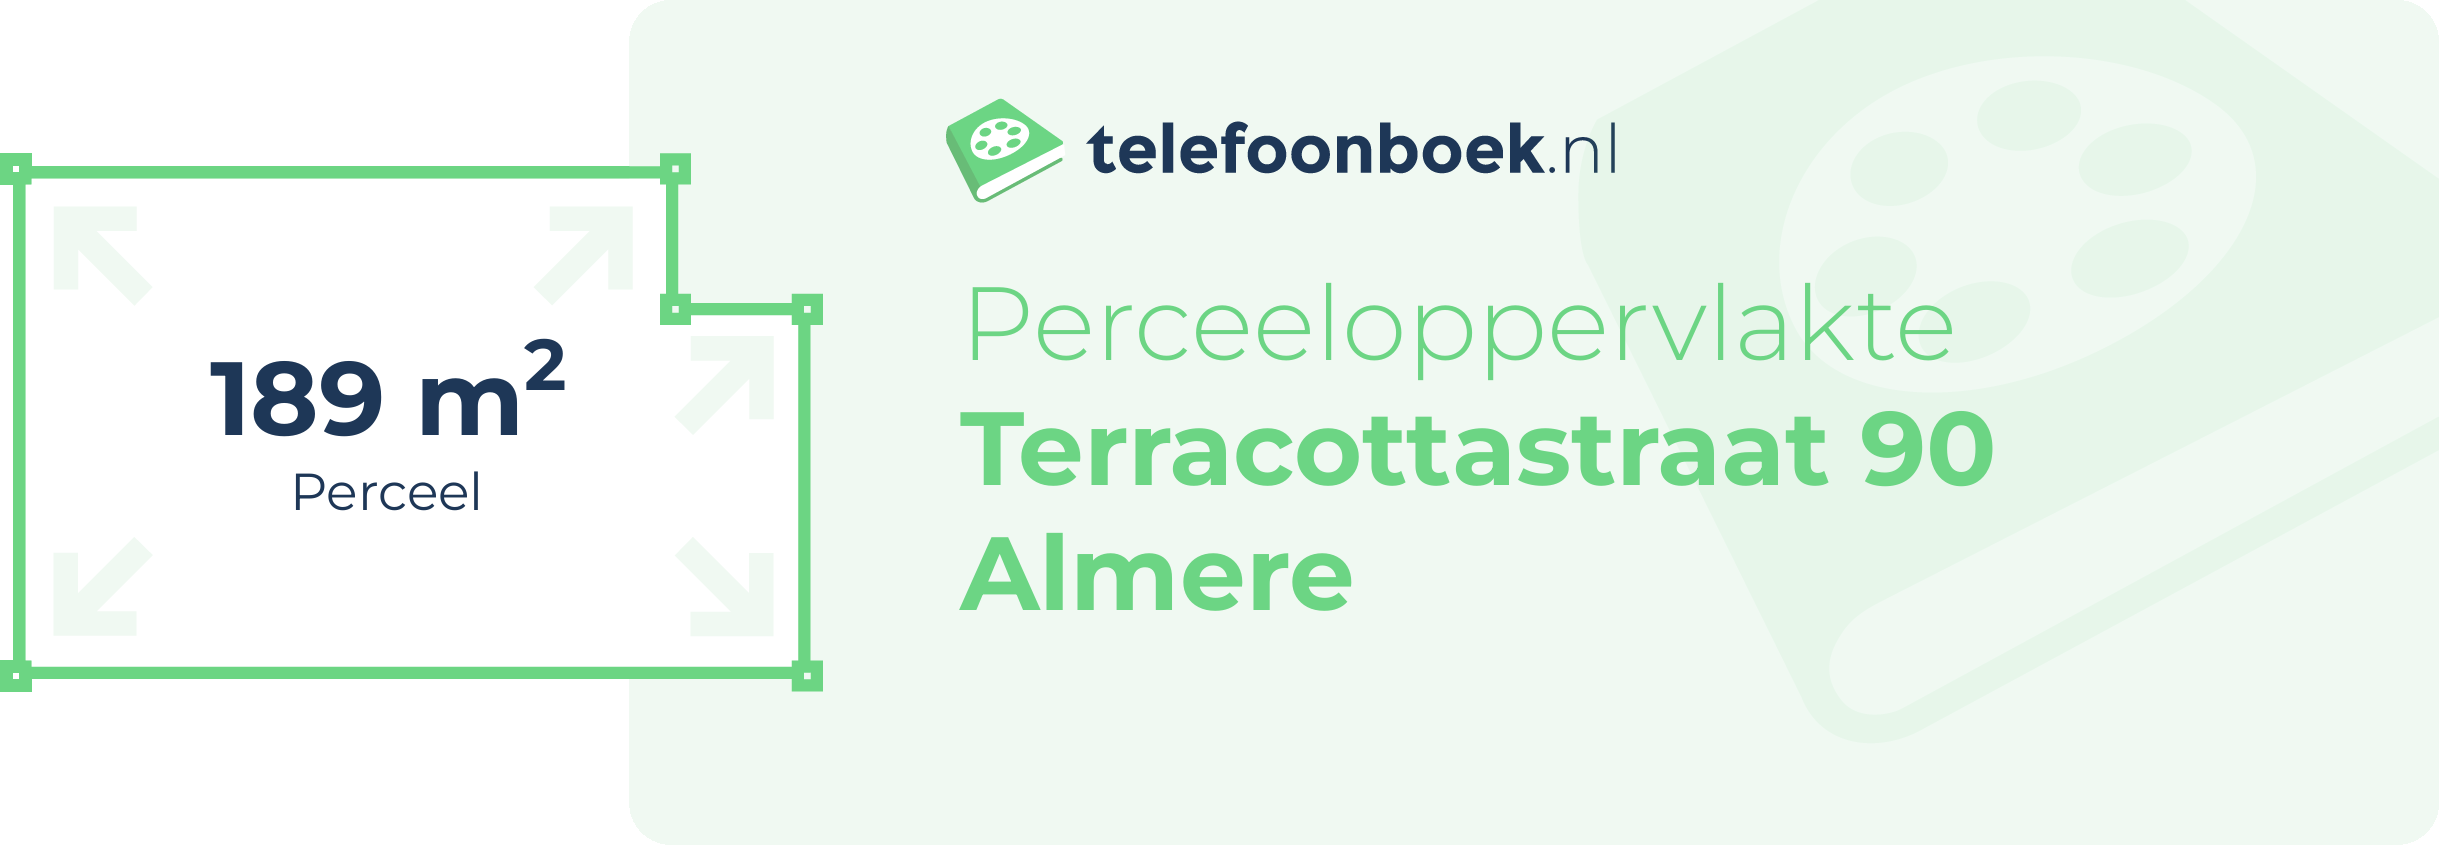 Perceeloppervlakte Terracottastraat 90 Almere